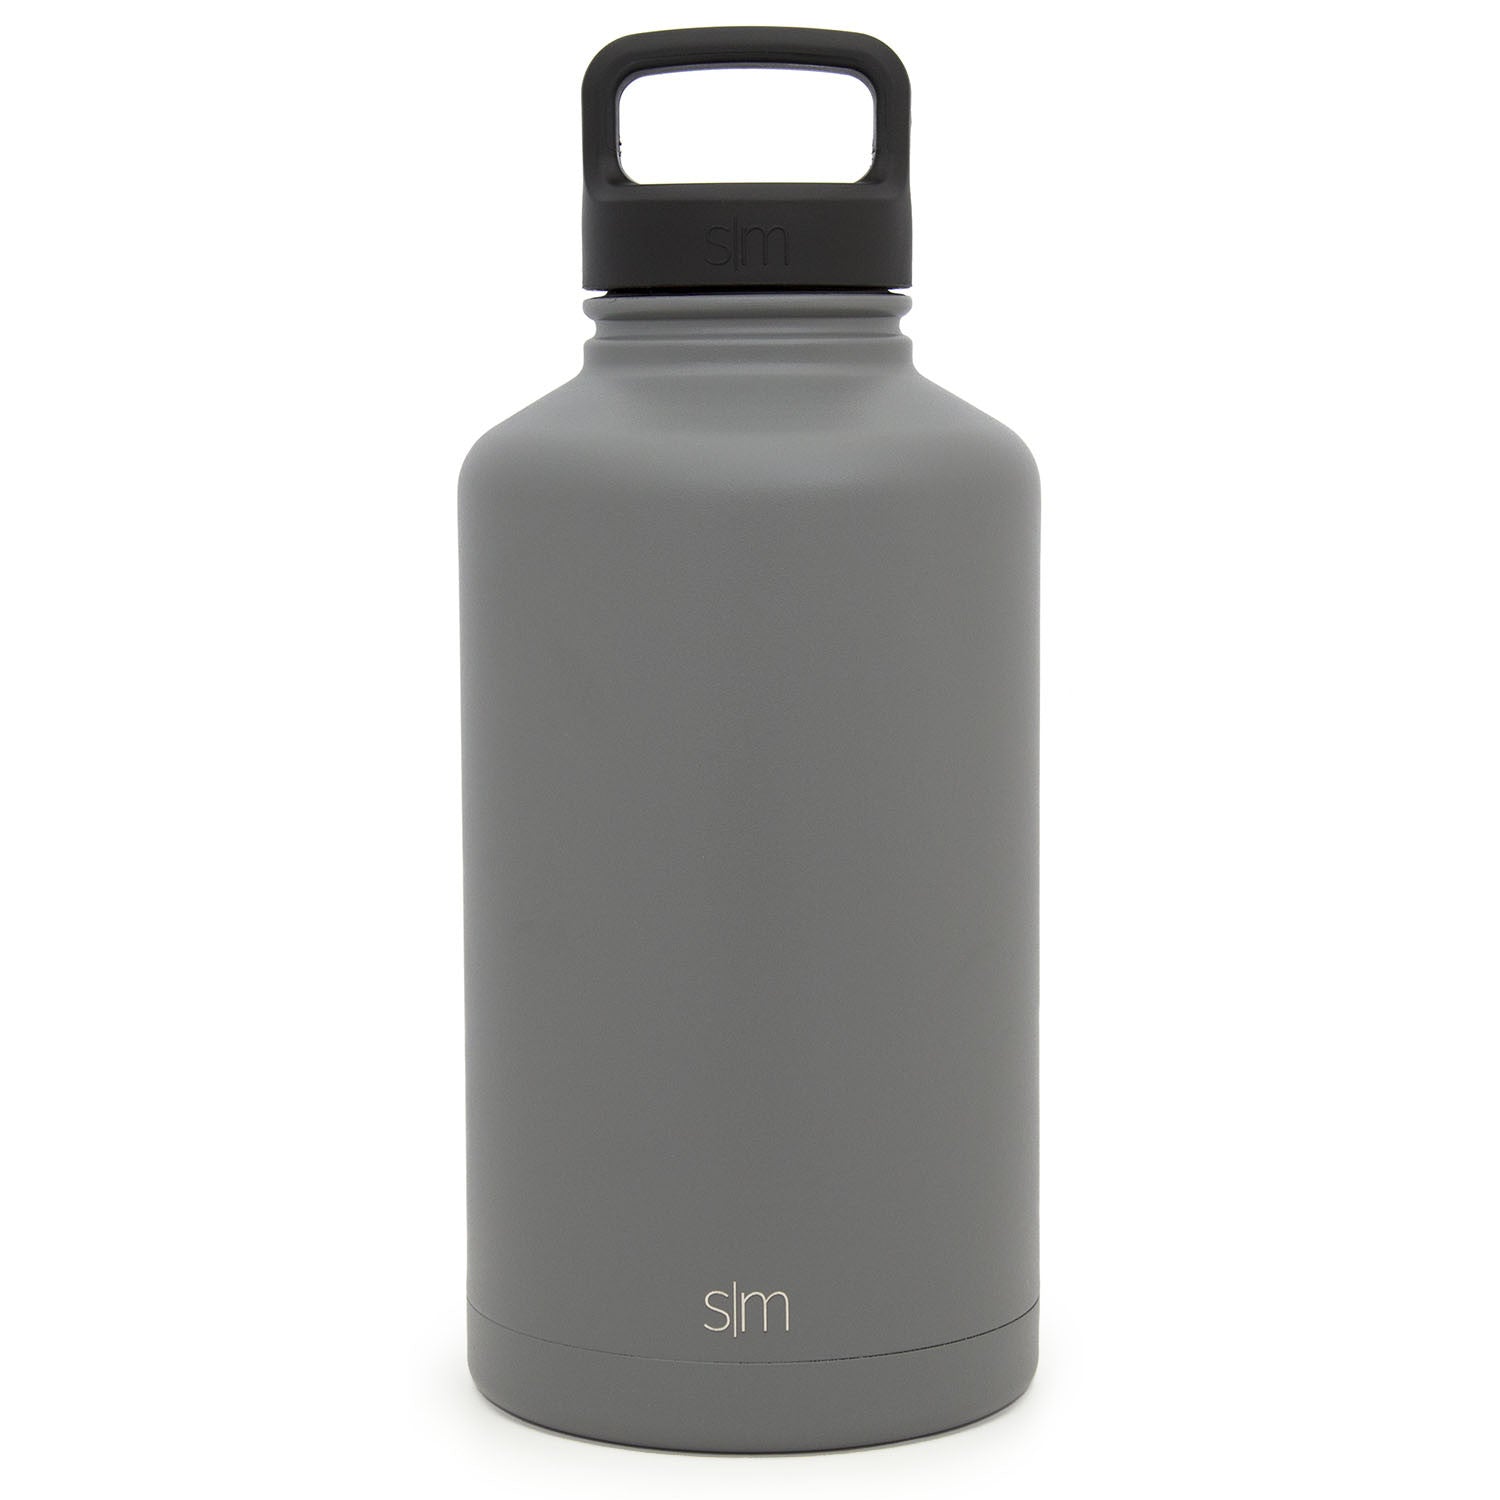 Simple Modern Midnight Black Summit Water Bottle with Straw Lid